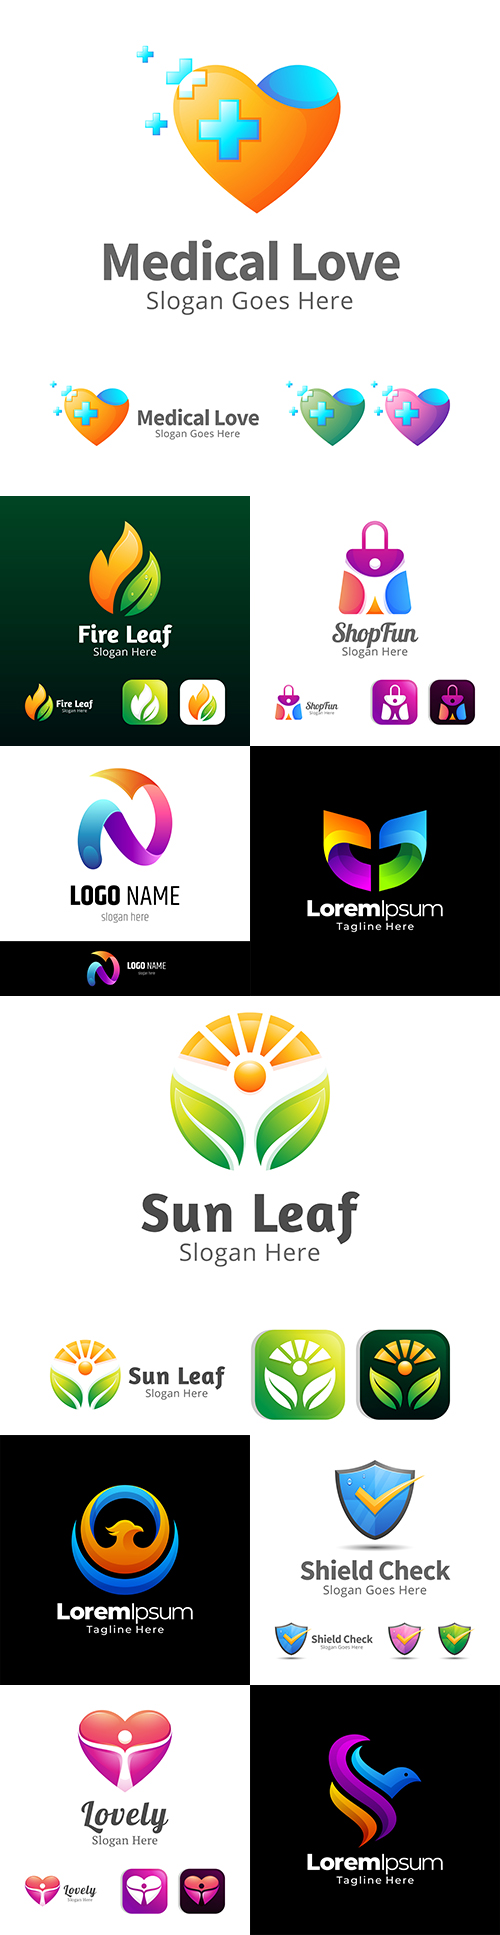 Brand name company business corporate logos design 12
